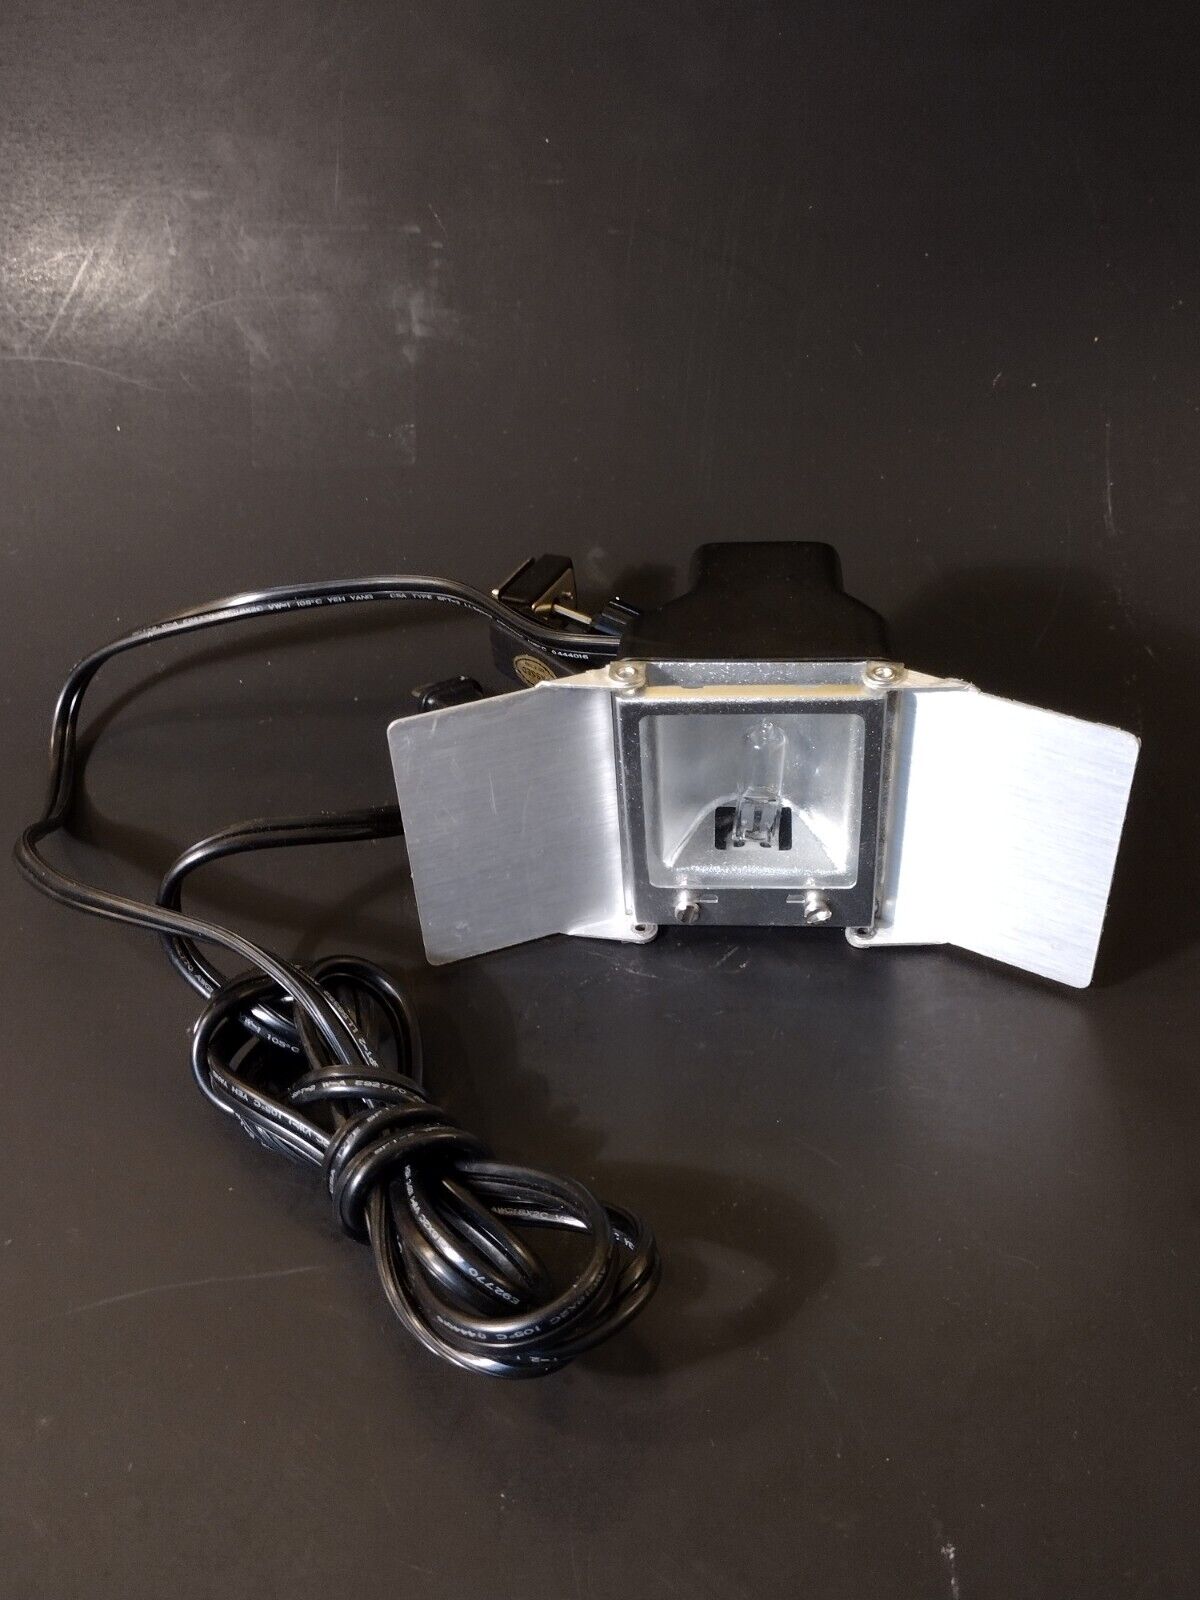 VINTAGE Val-u-light V1000 Ambico Camera Light Accessory Tested Works Needs Bulb